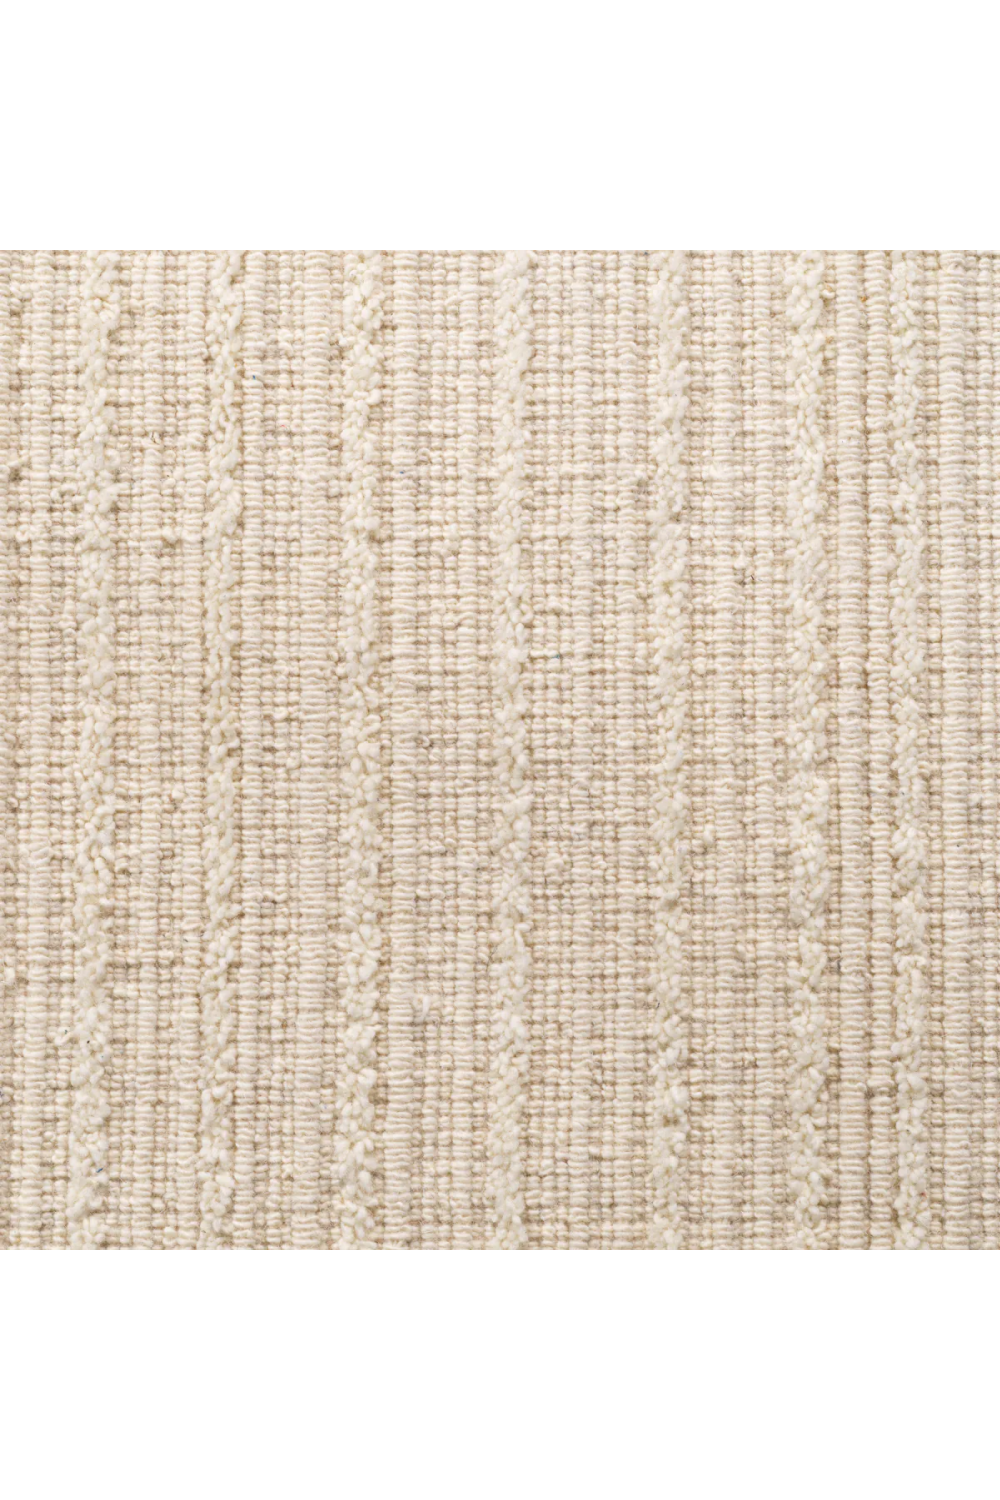 Minimalist Wool Carpet 10' x 13' | Eichholtz Torrance | Oroa.com